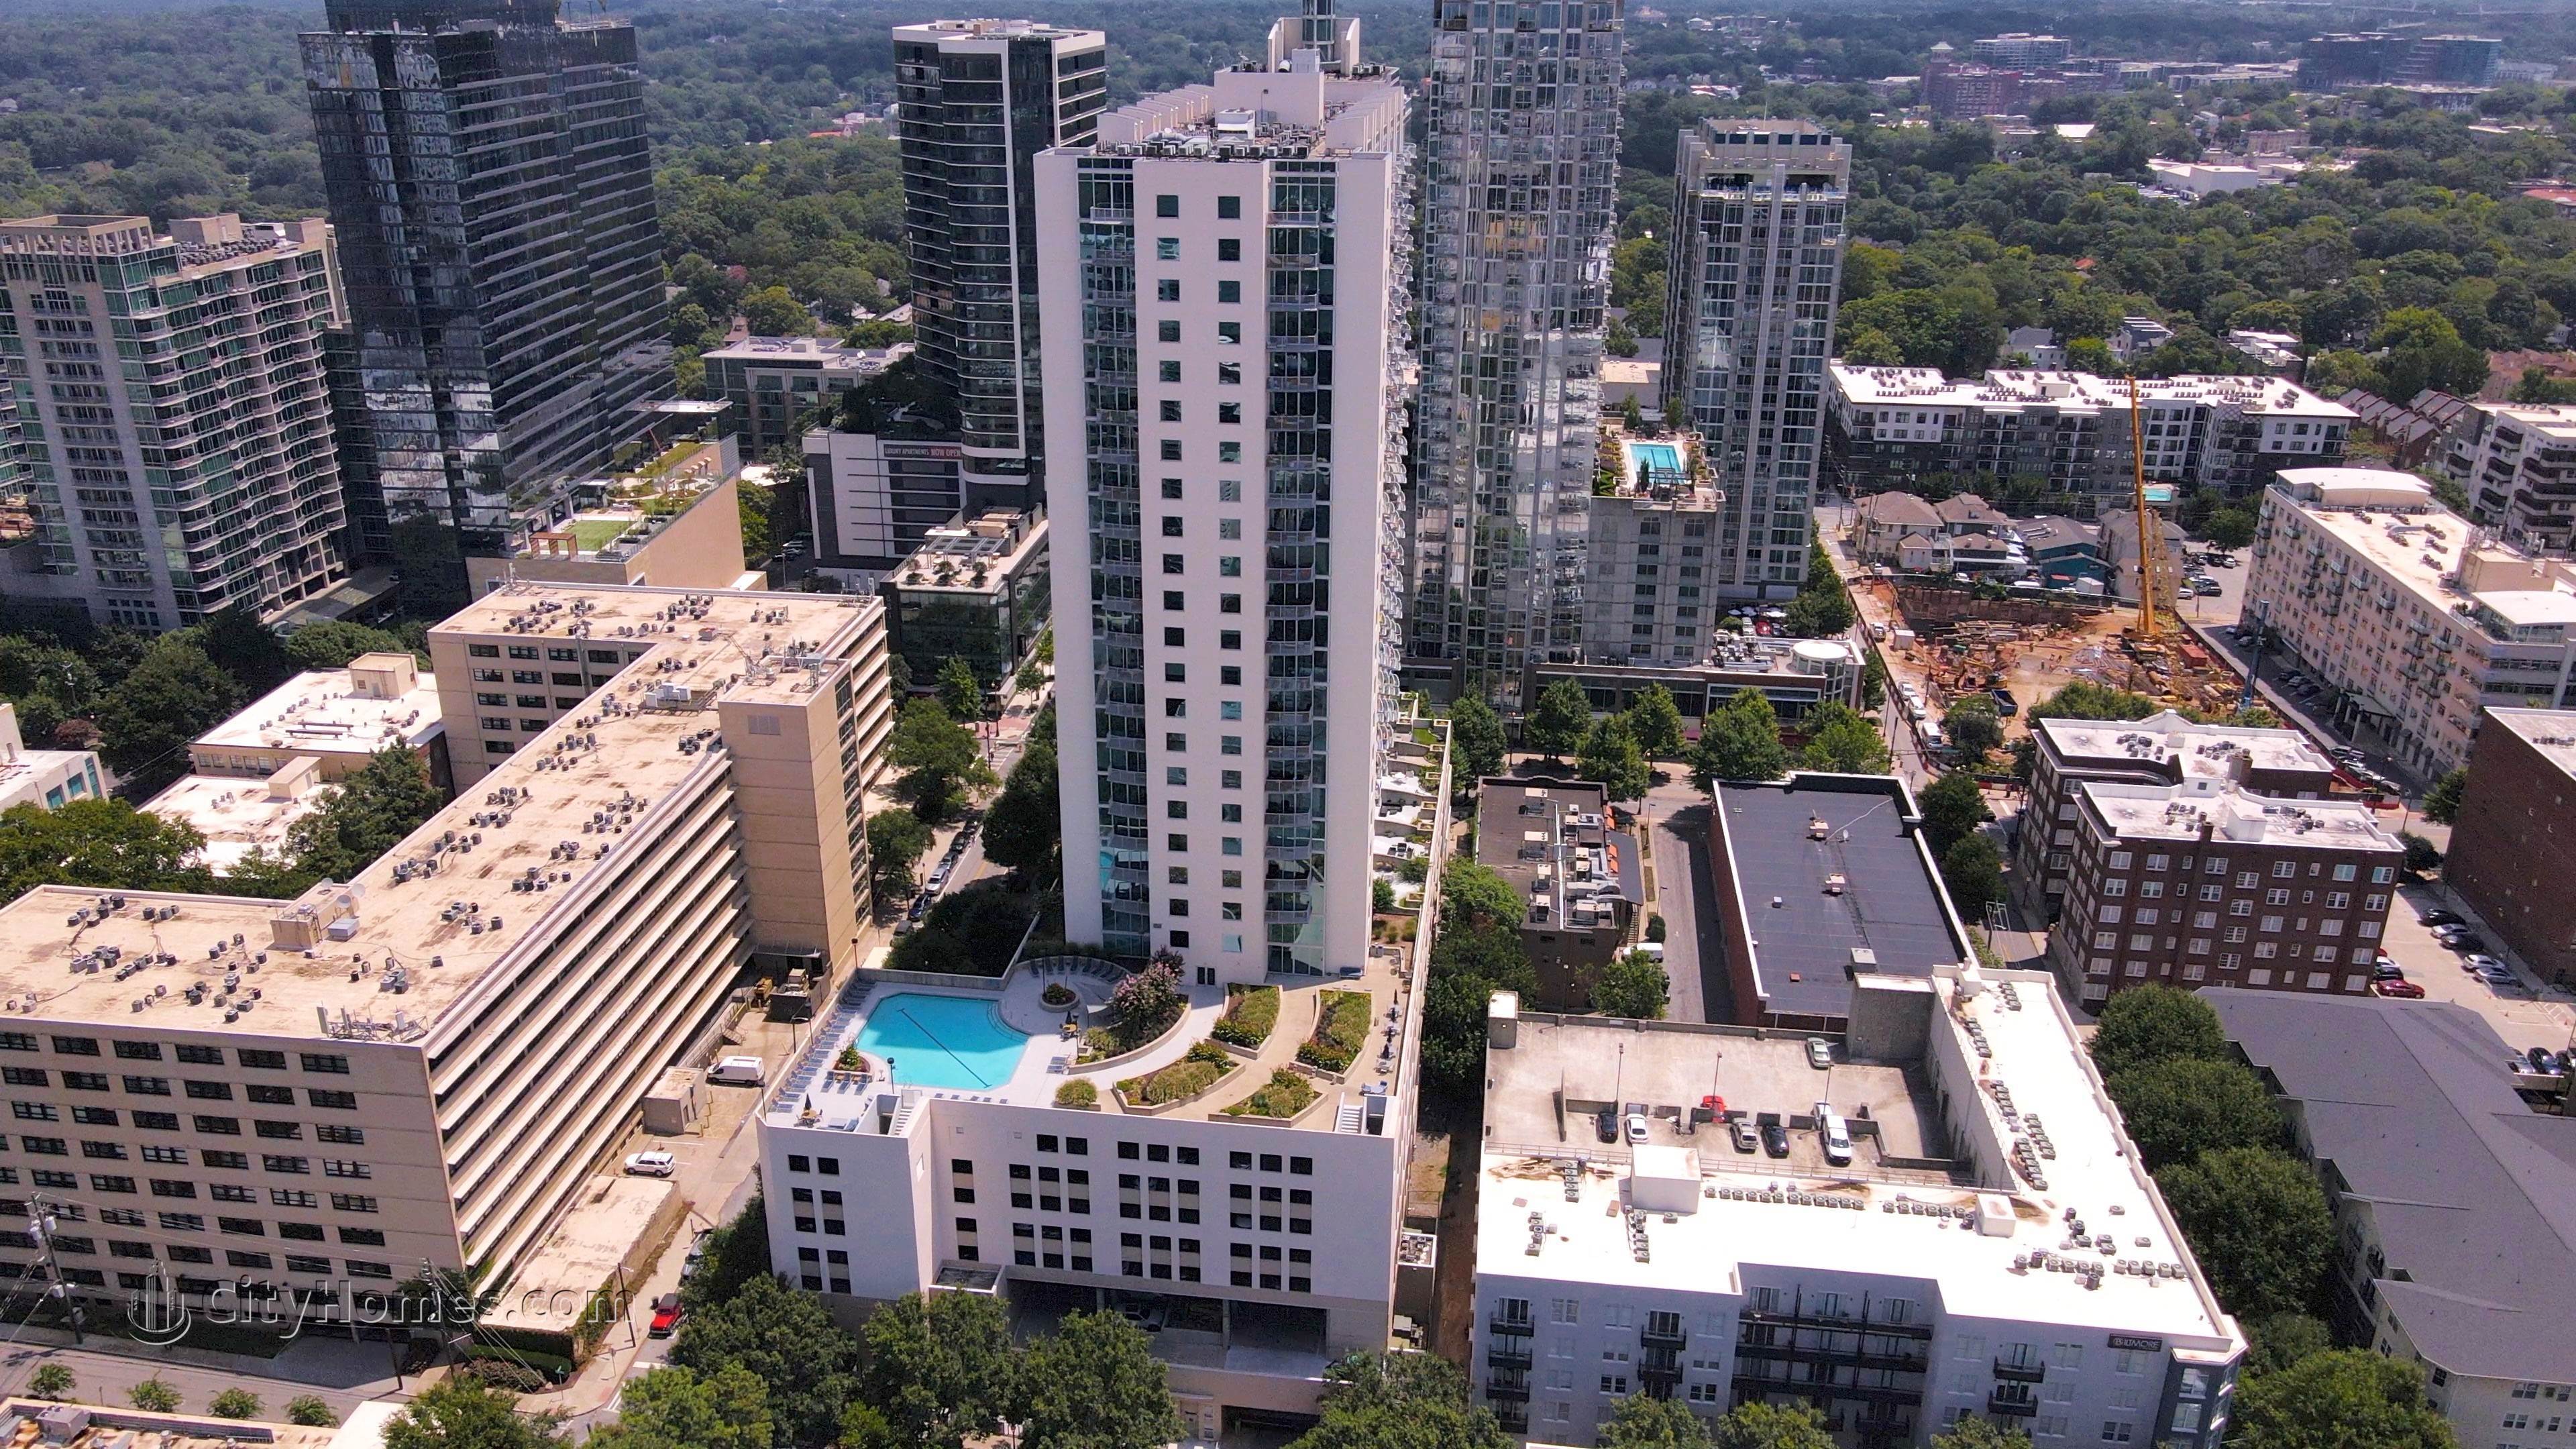 3. Spire Condominiums building at 860 Peachtree St NE, Greater Midtown, Atlanta, GA 30308